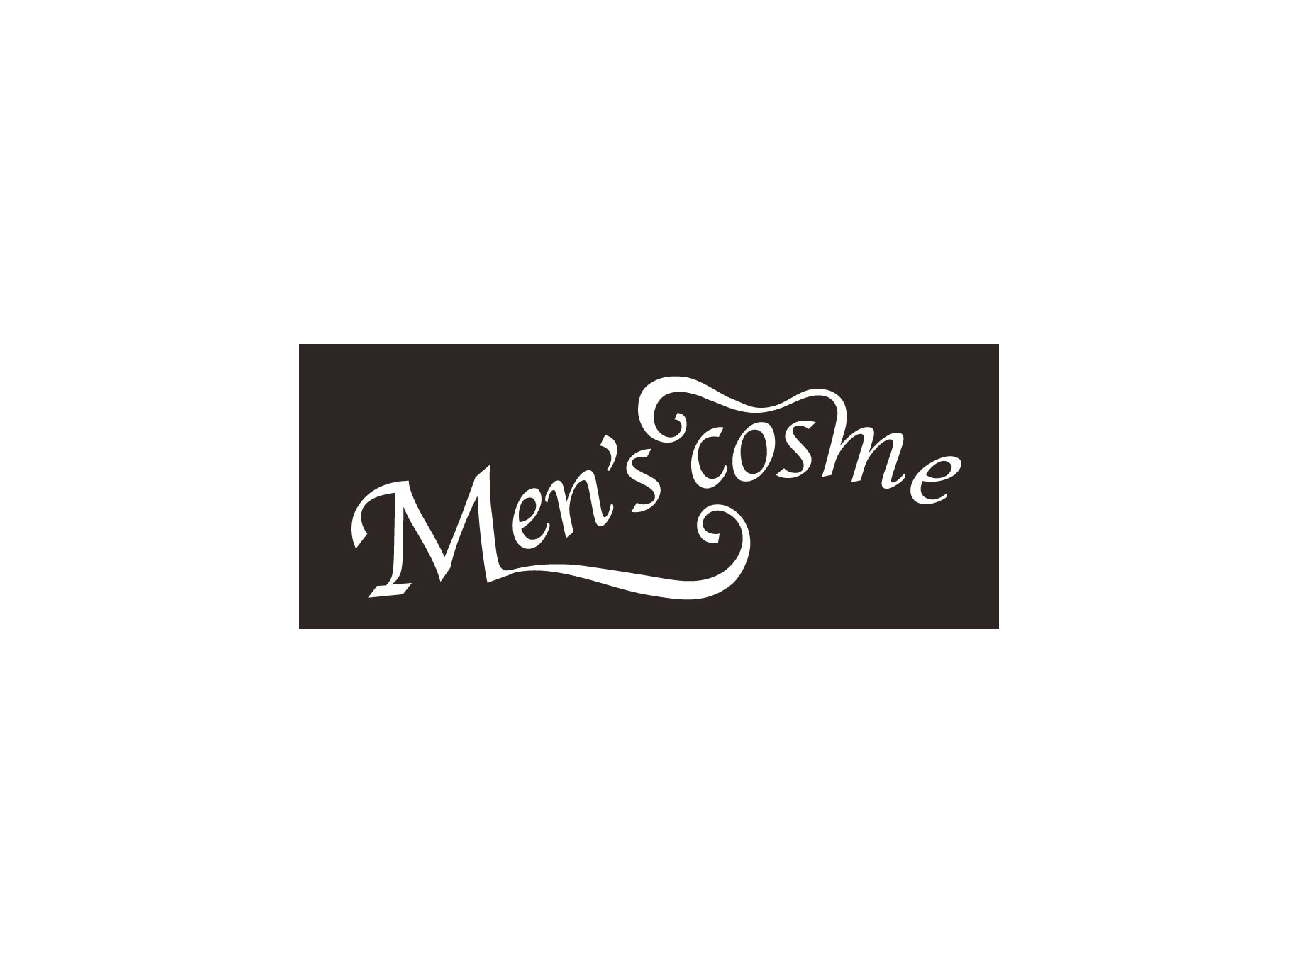 Men’s Cosme